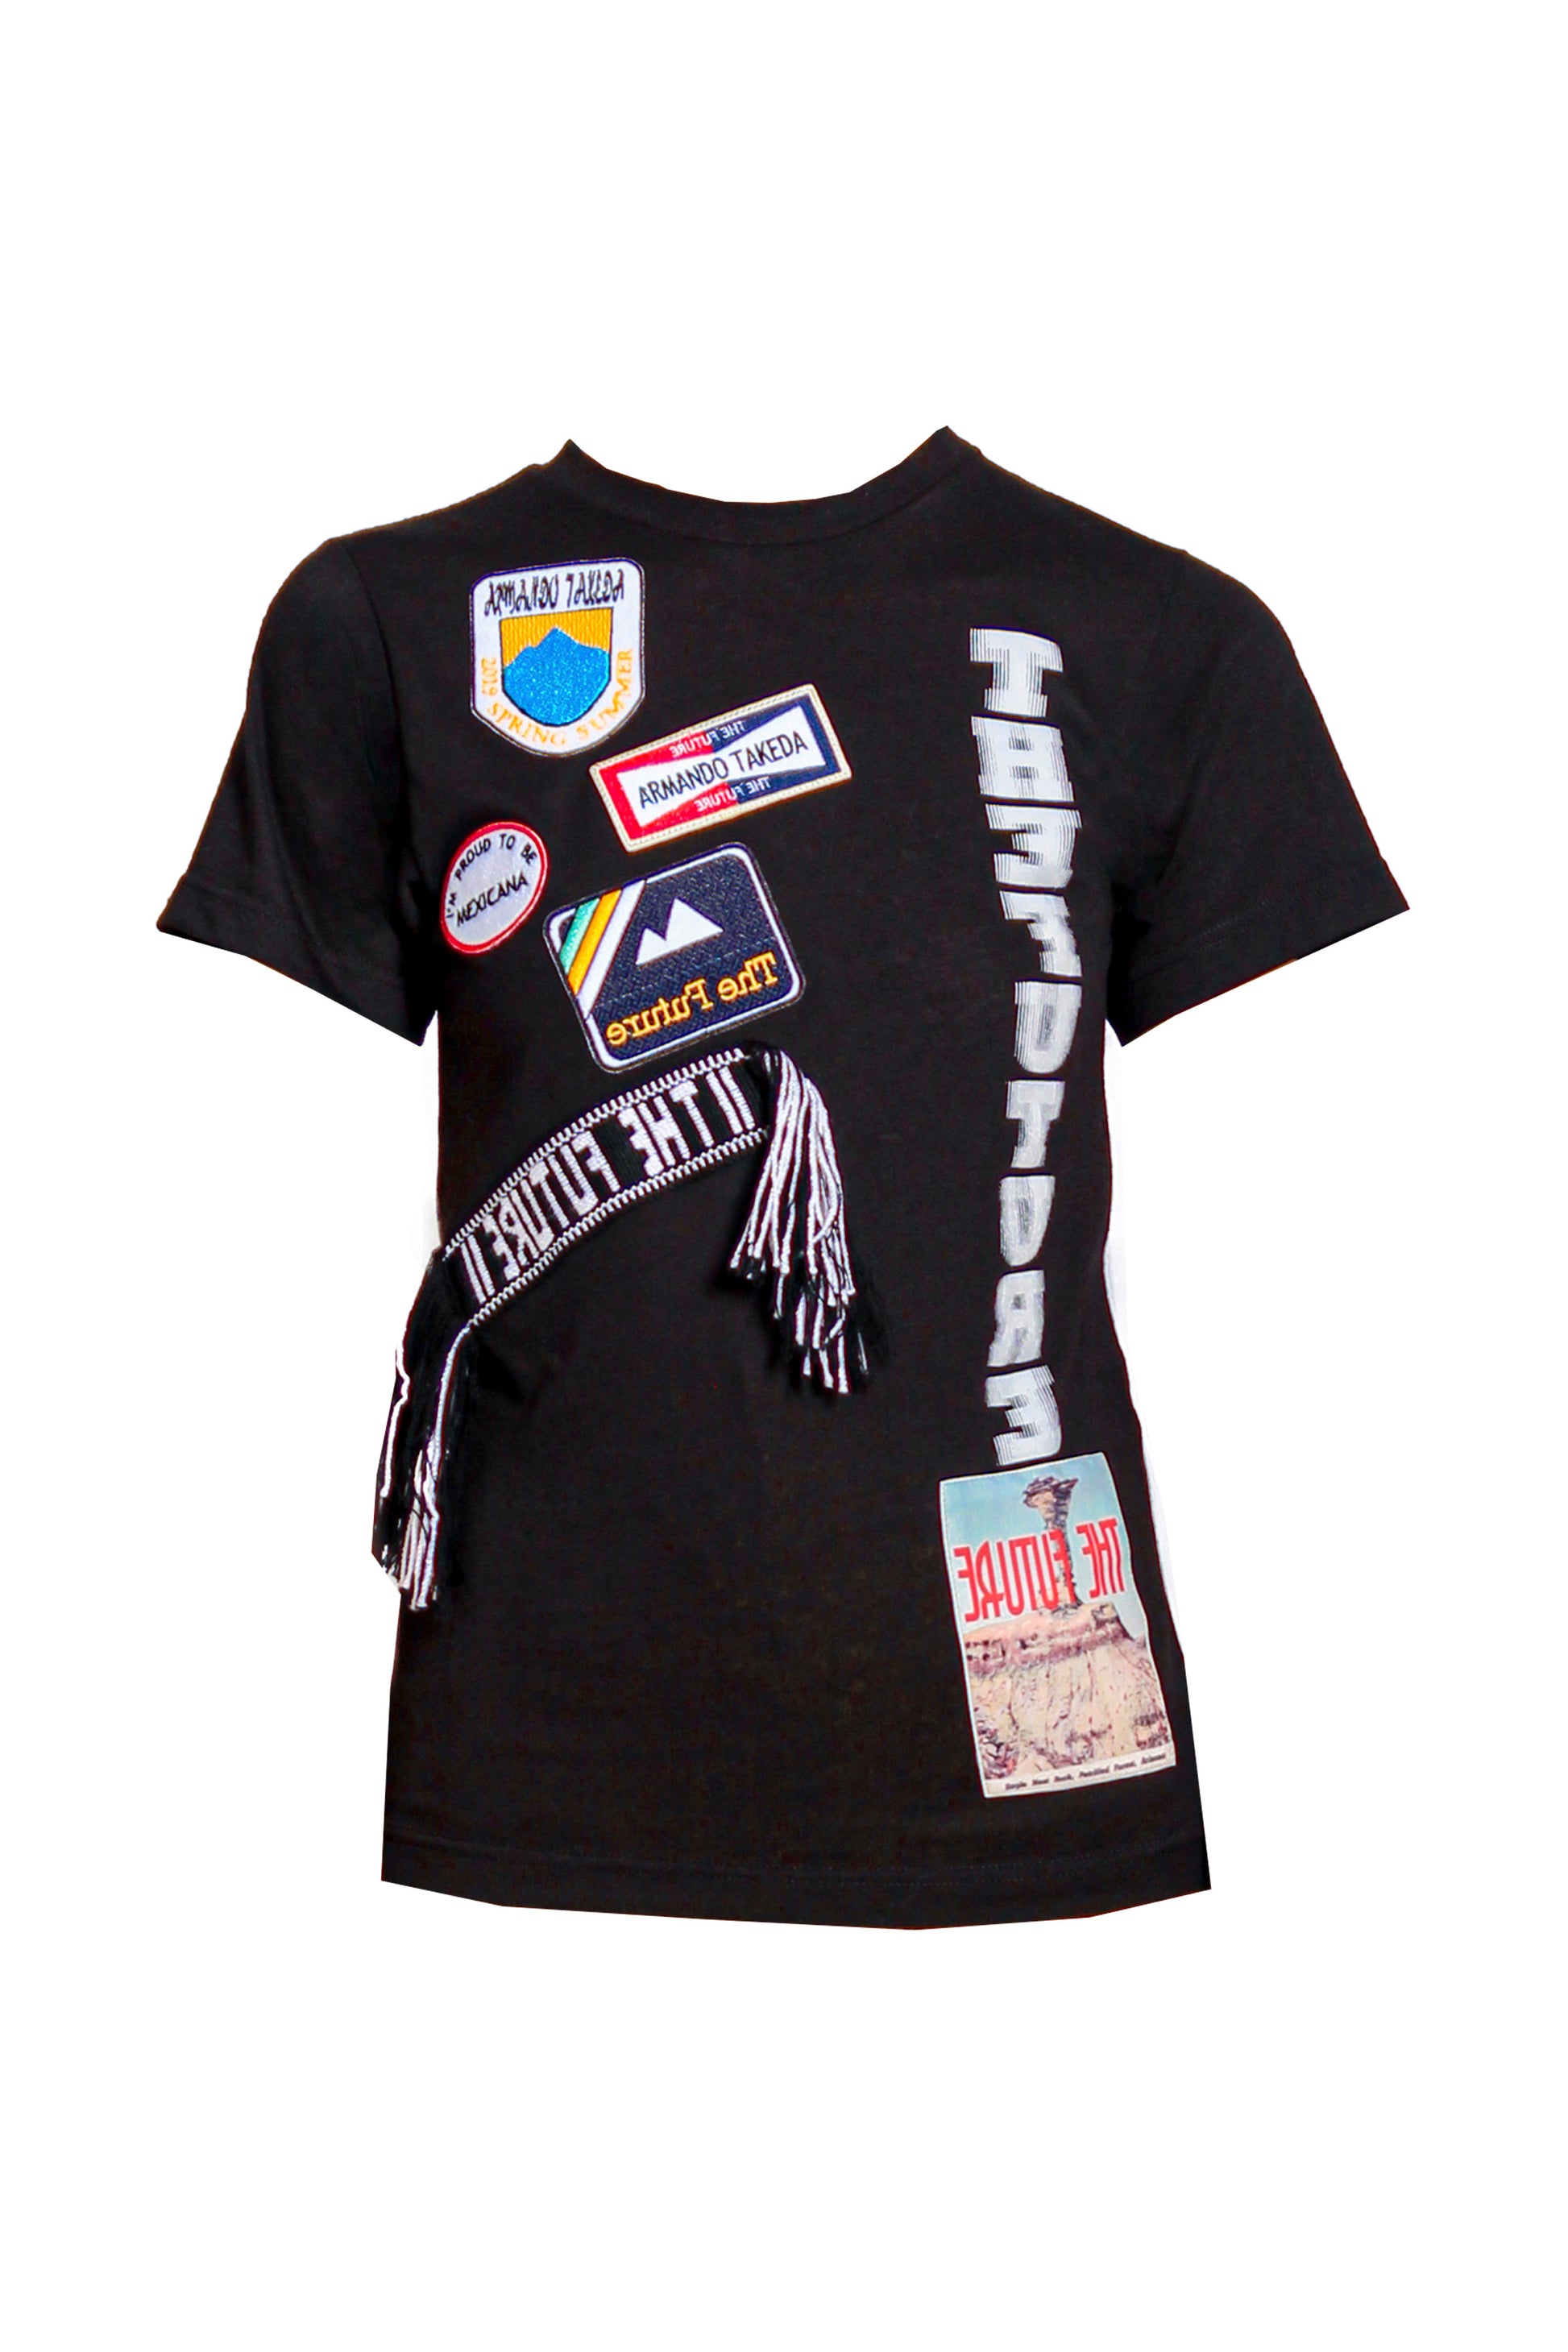 'El tiempo' Patch T-shirt with Purepecha tape – ARMANDO TAKEDA